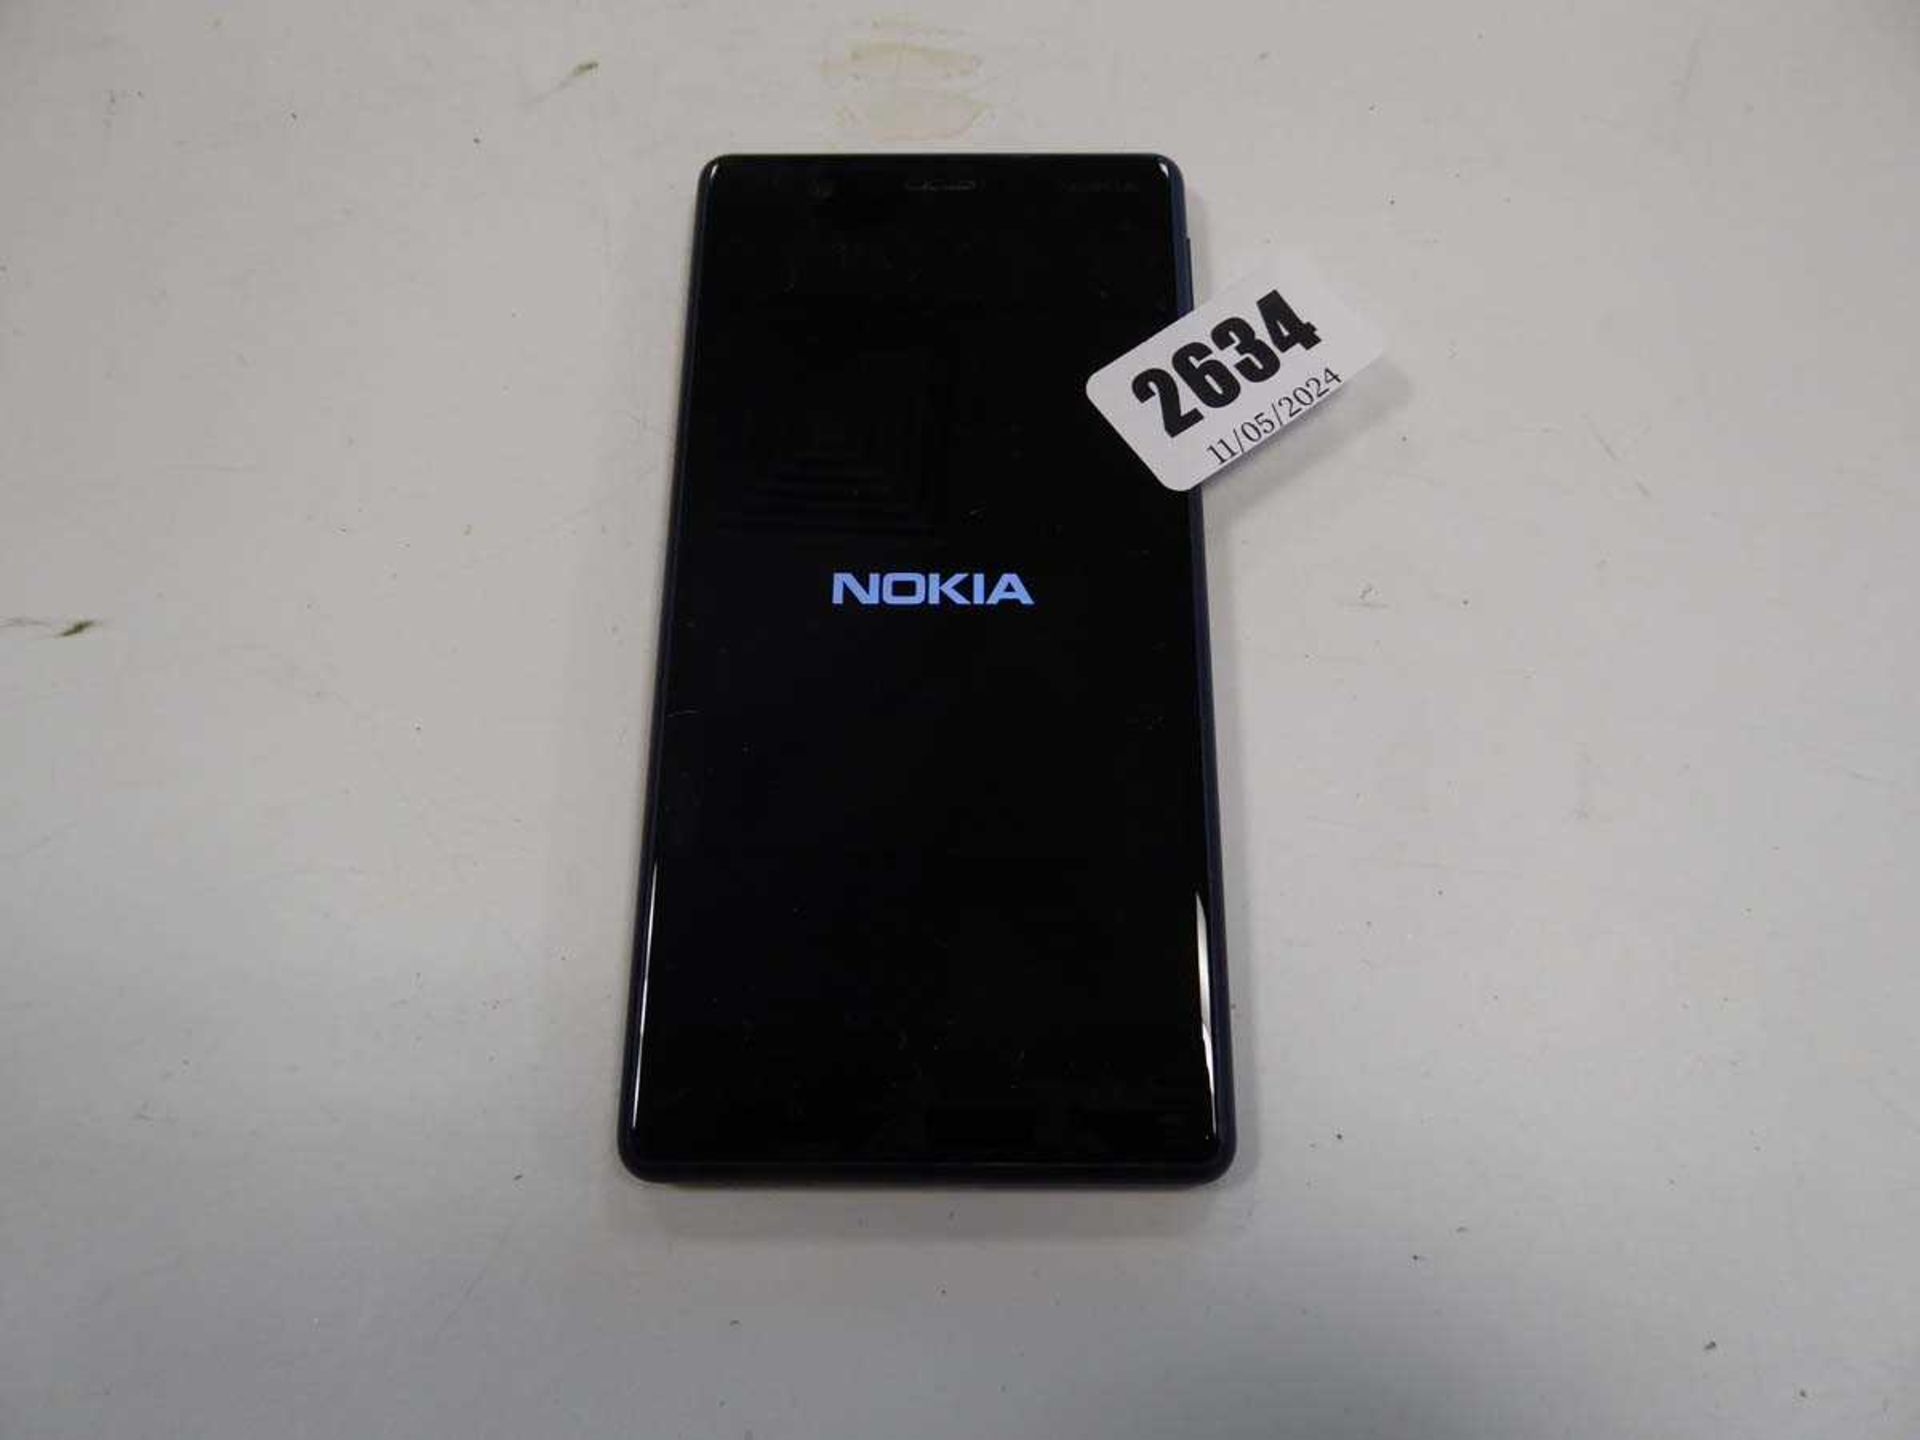 Nokia TA1020 mobile phone